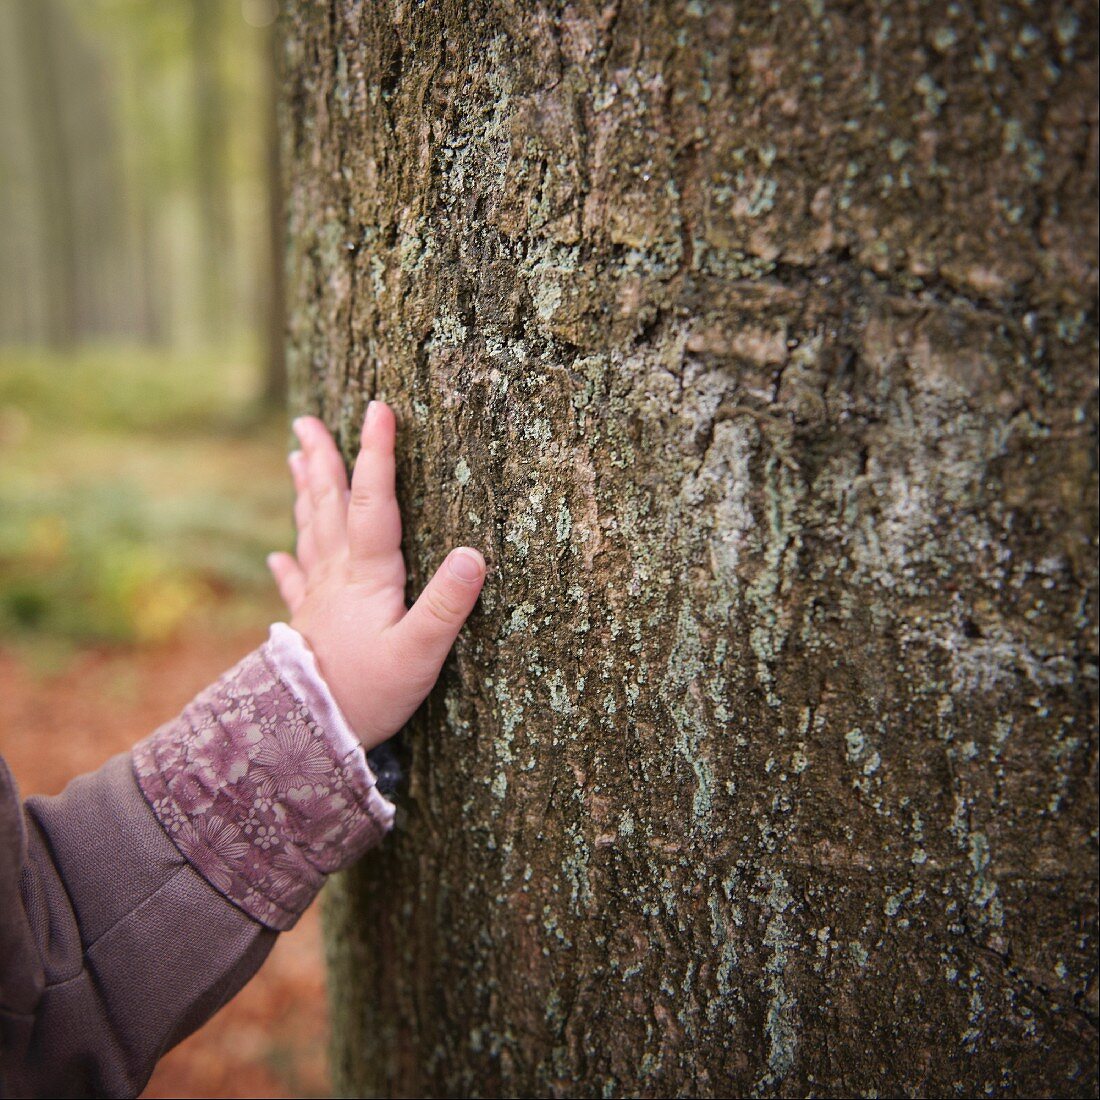 Child's hand touching tree trunk